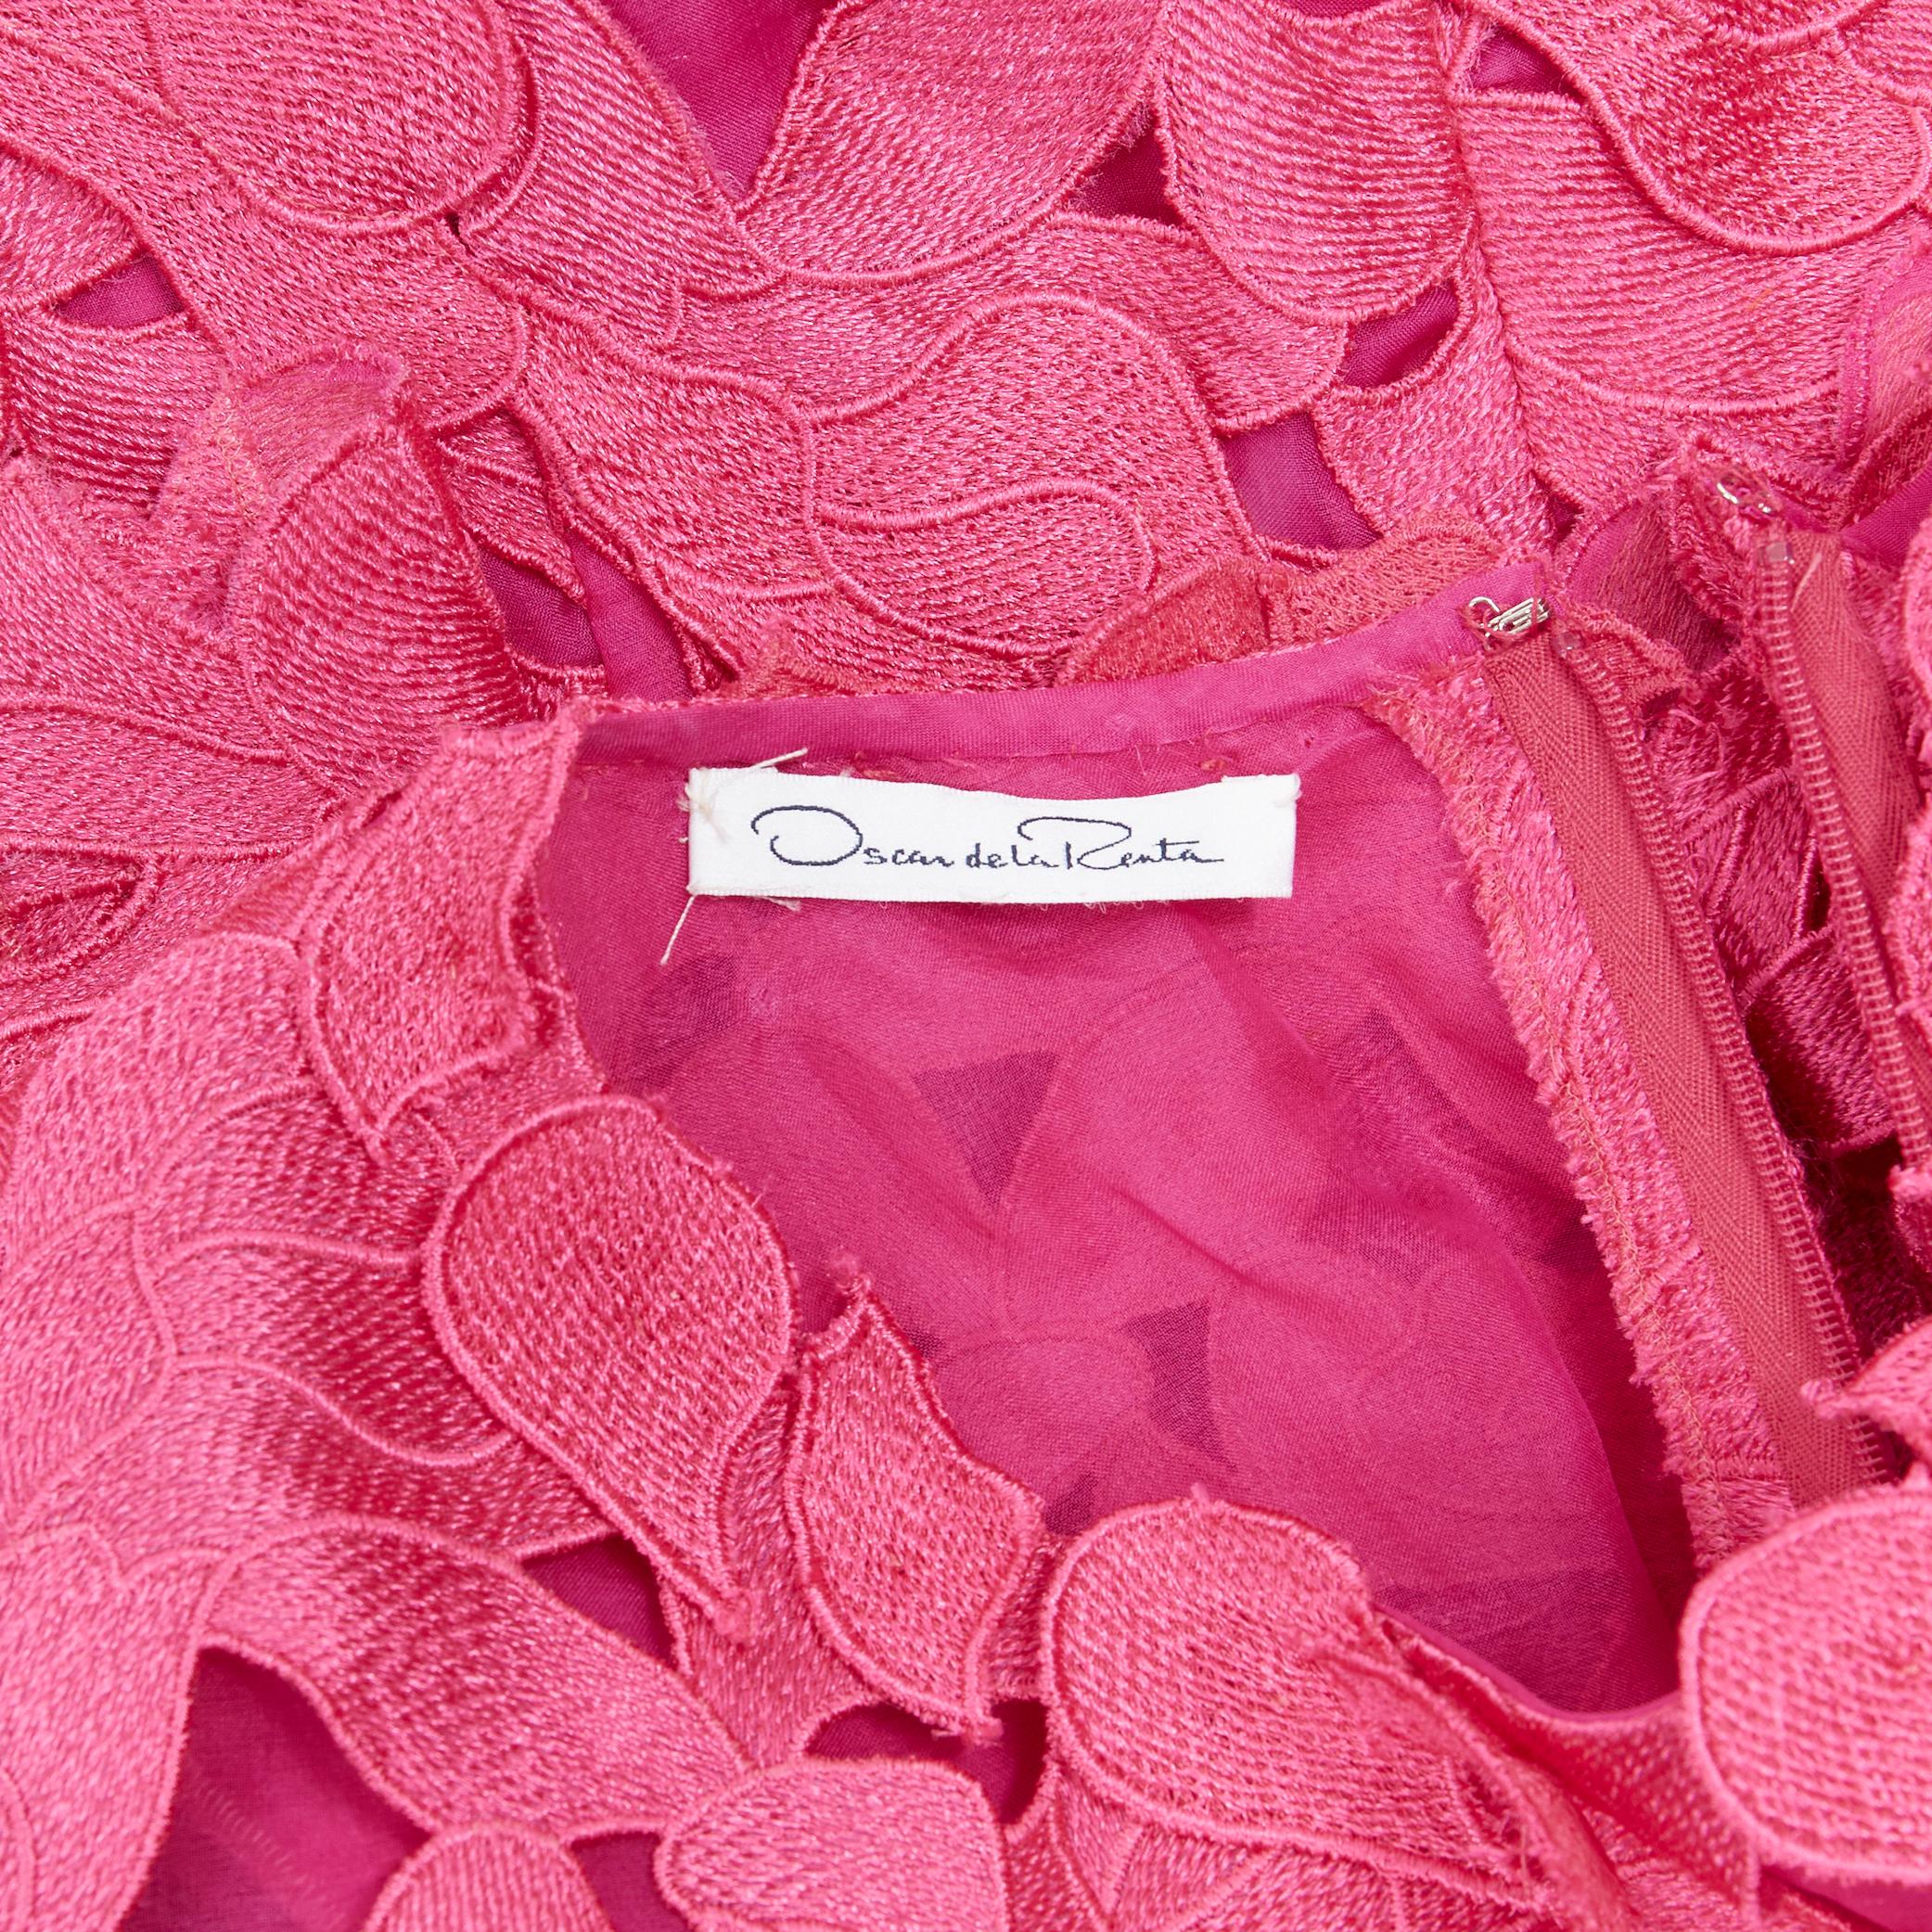 OSCAR DE LA RENTA fuchsia pink floral print 3/4 sleeve cocktail dress XS 4